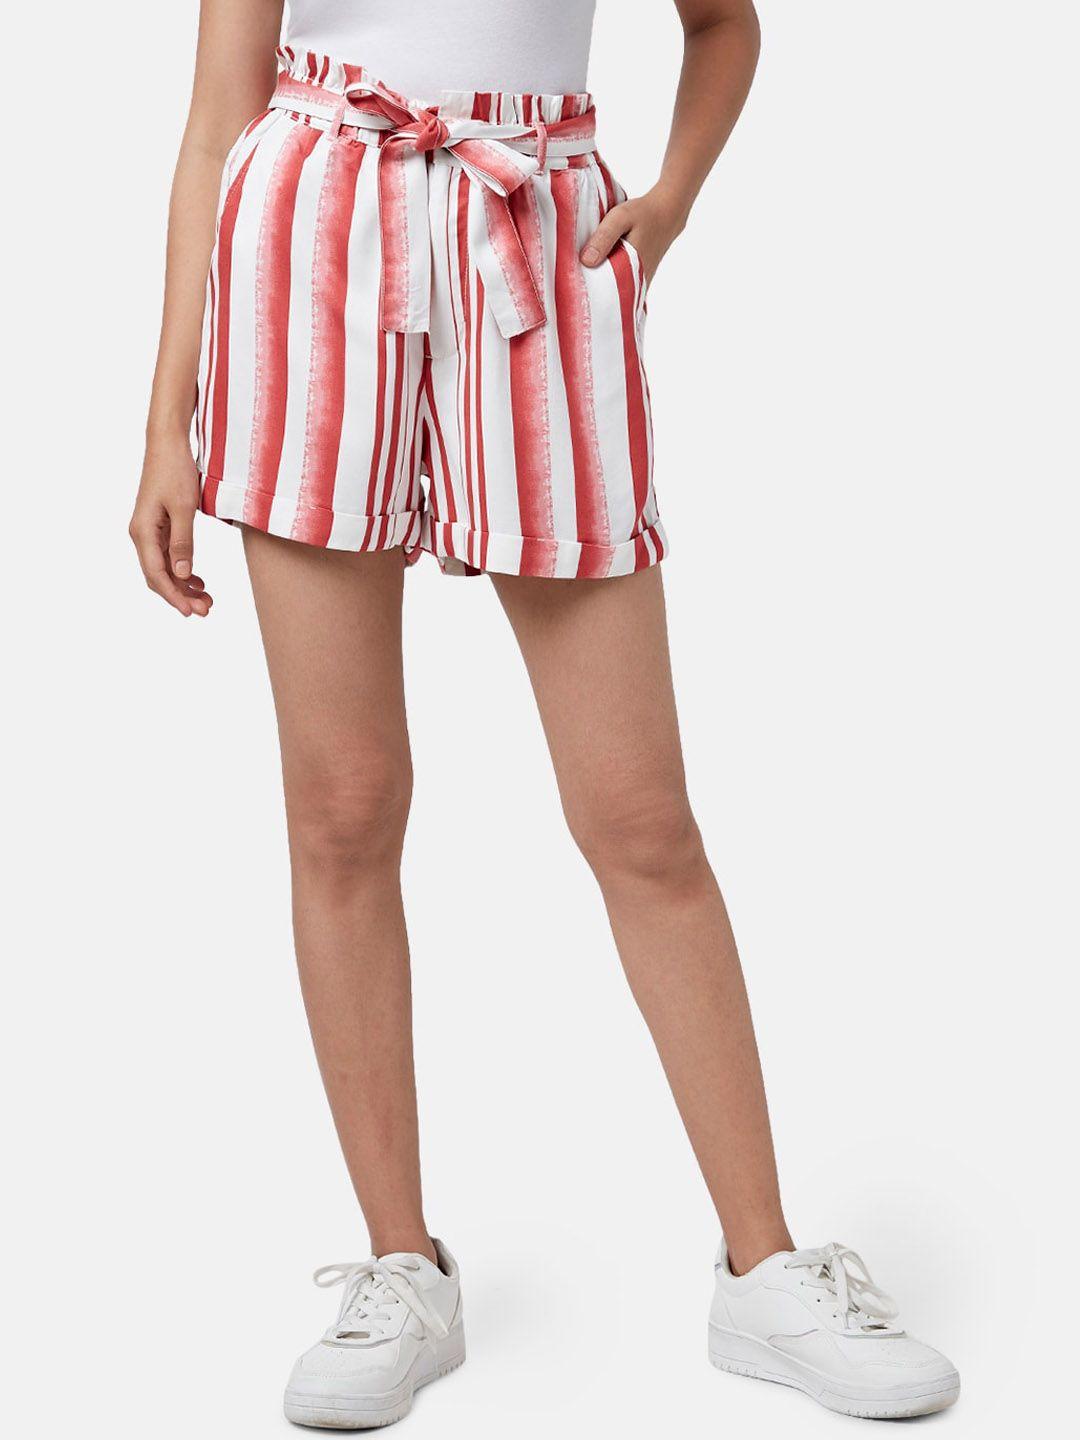 honey-by-pantaloons-women-striped-high-rise-shorts